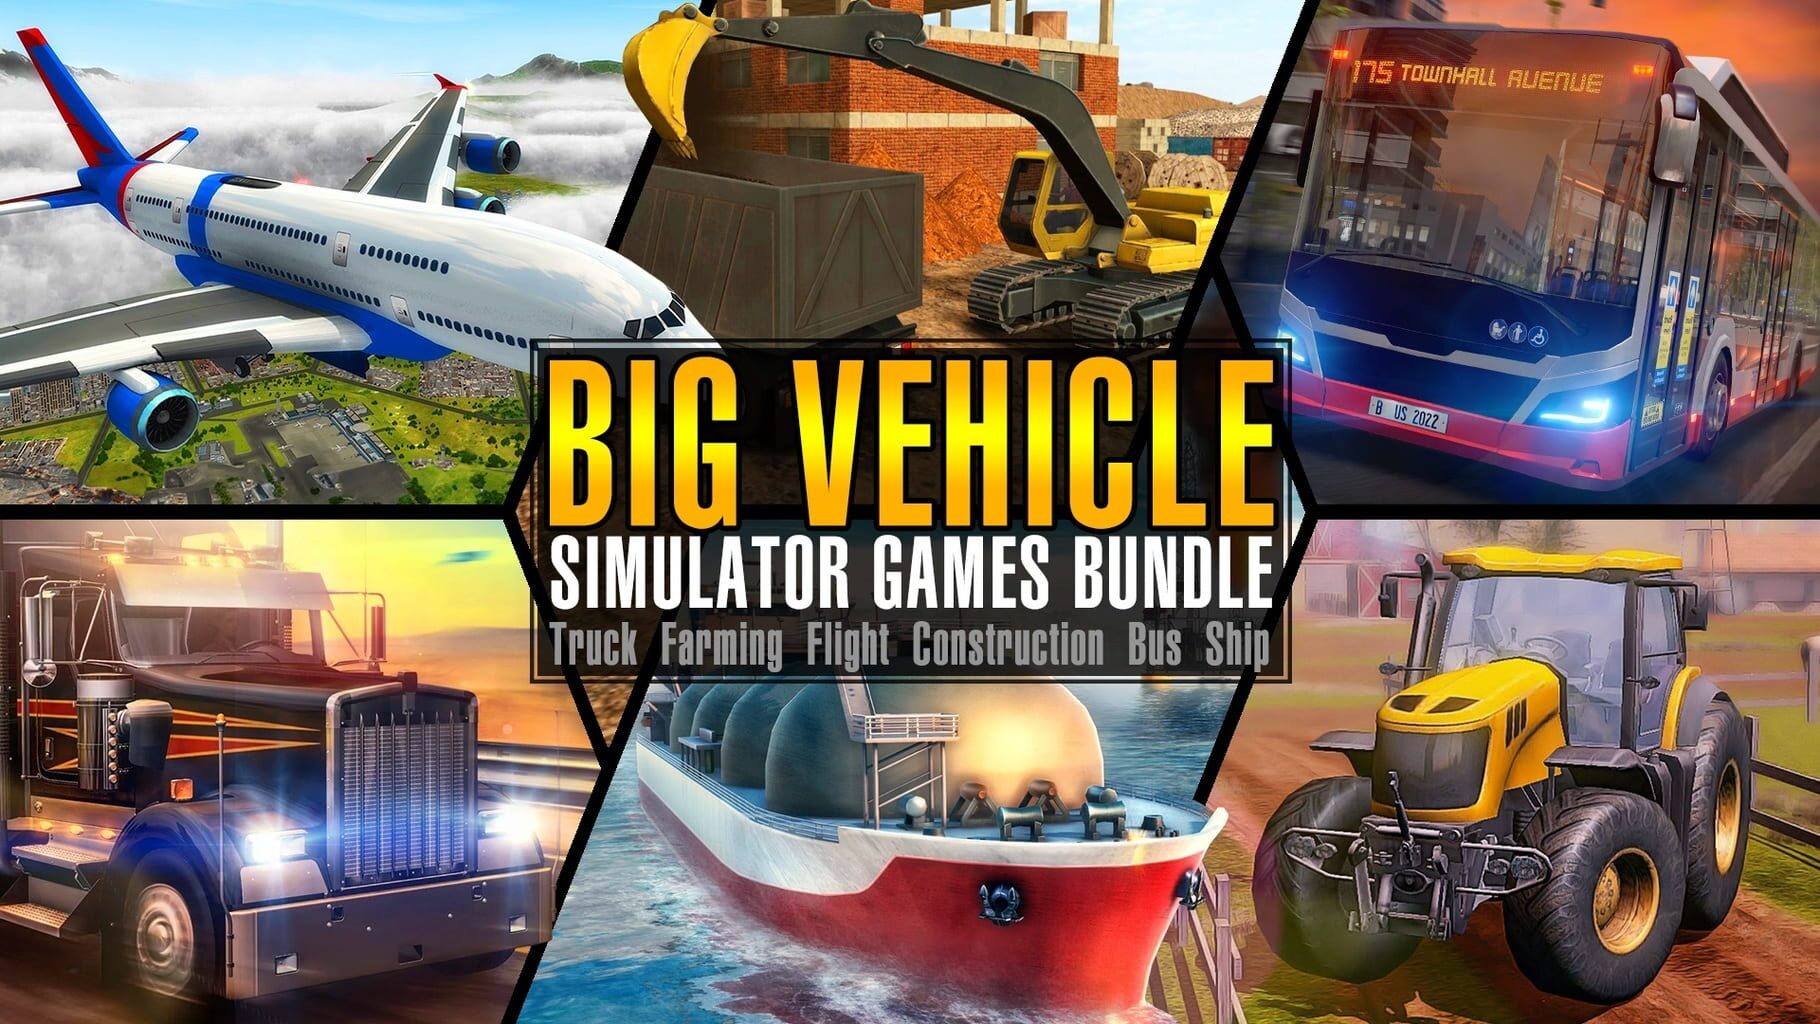 Big Vehicle Simulator Games Bundle: Truck Farming Flight Construction Bus Ship artwork